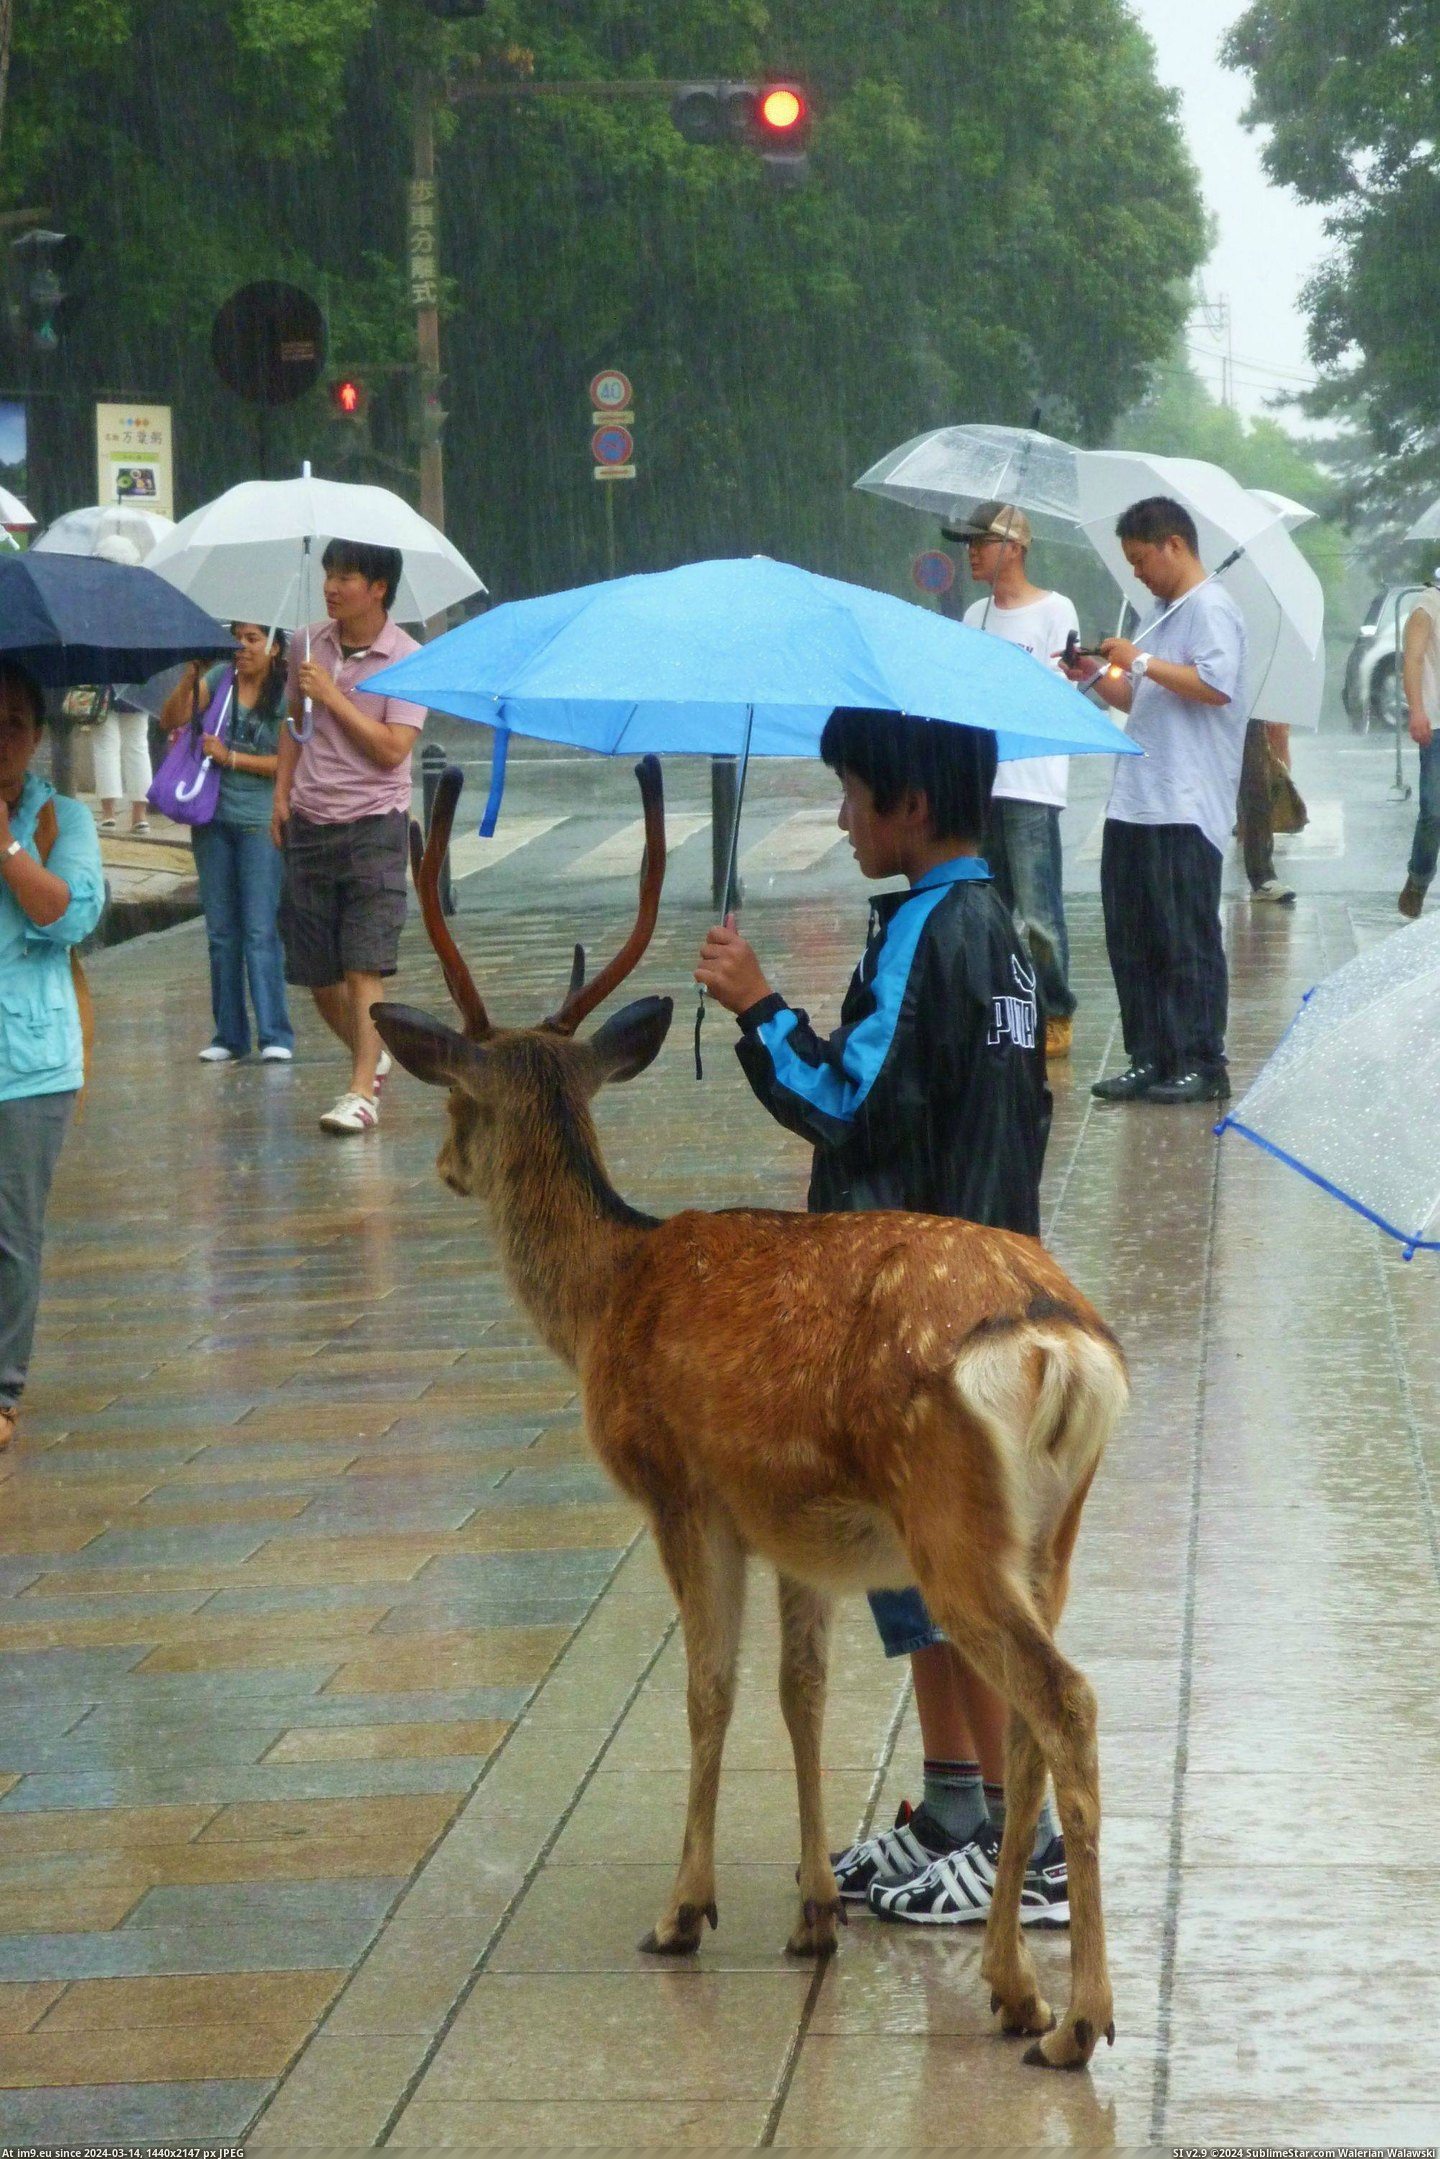 #Park #Japan #Shelter #Nara #Giving #Rain [Pics] Giving shelter in the rain - Nara Park, Japan. Pic. (Obraz z album My r/PICS favs))